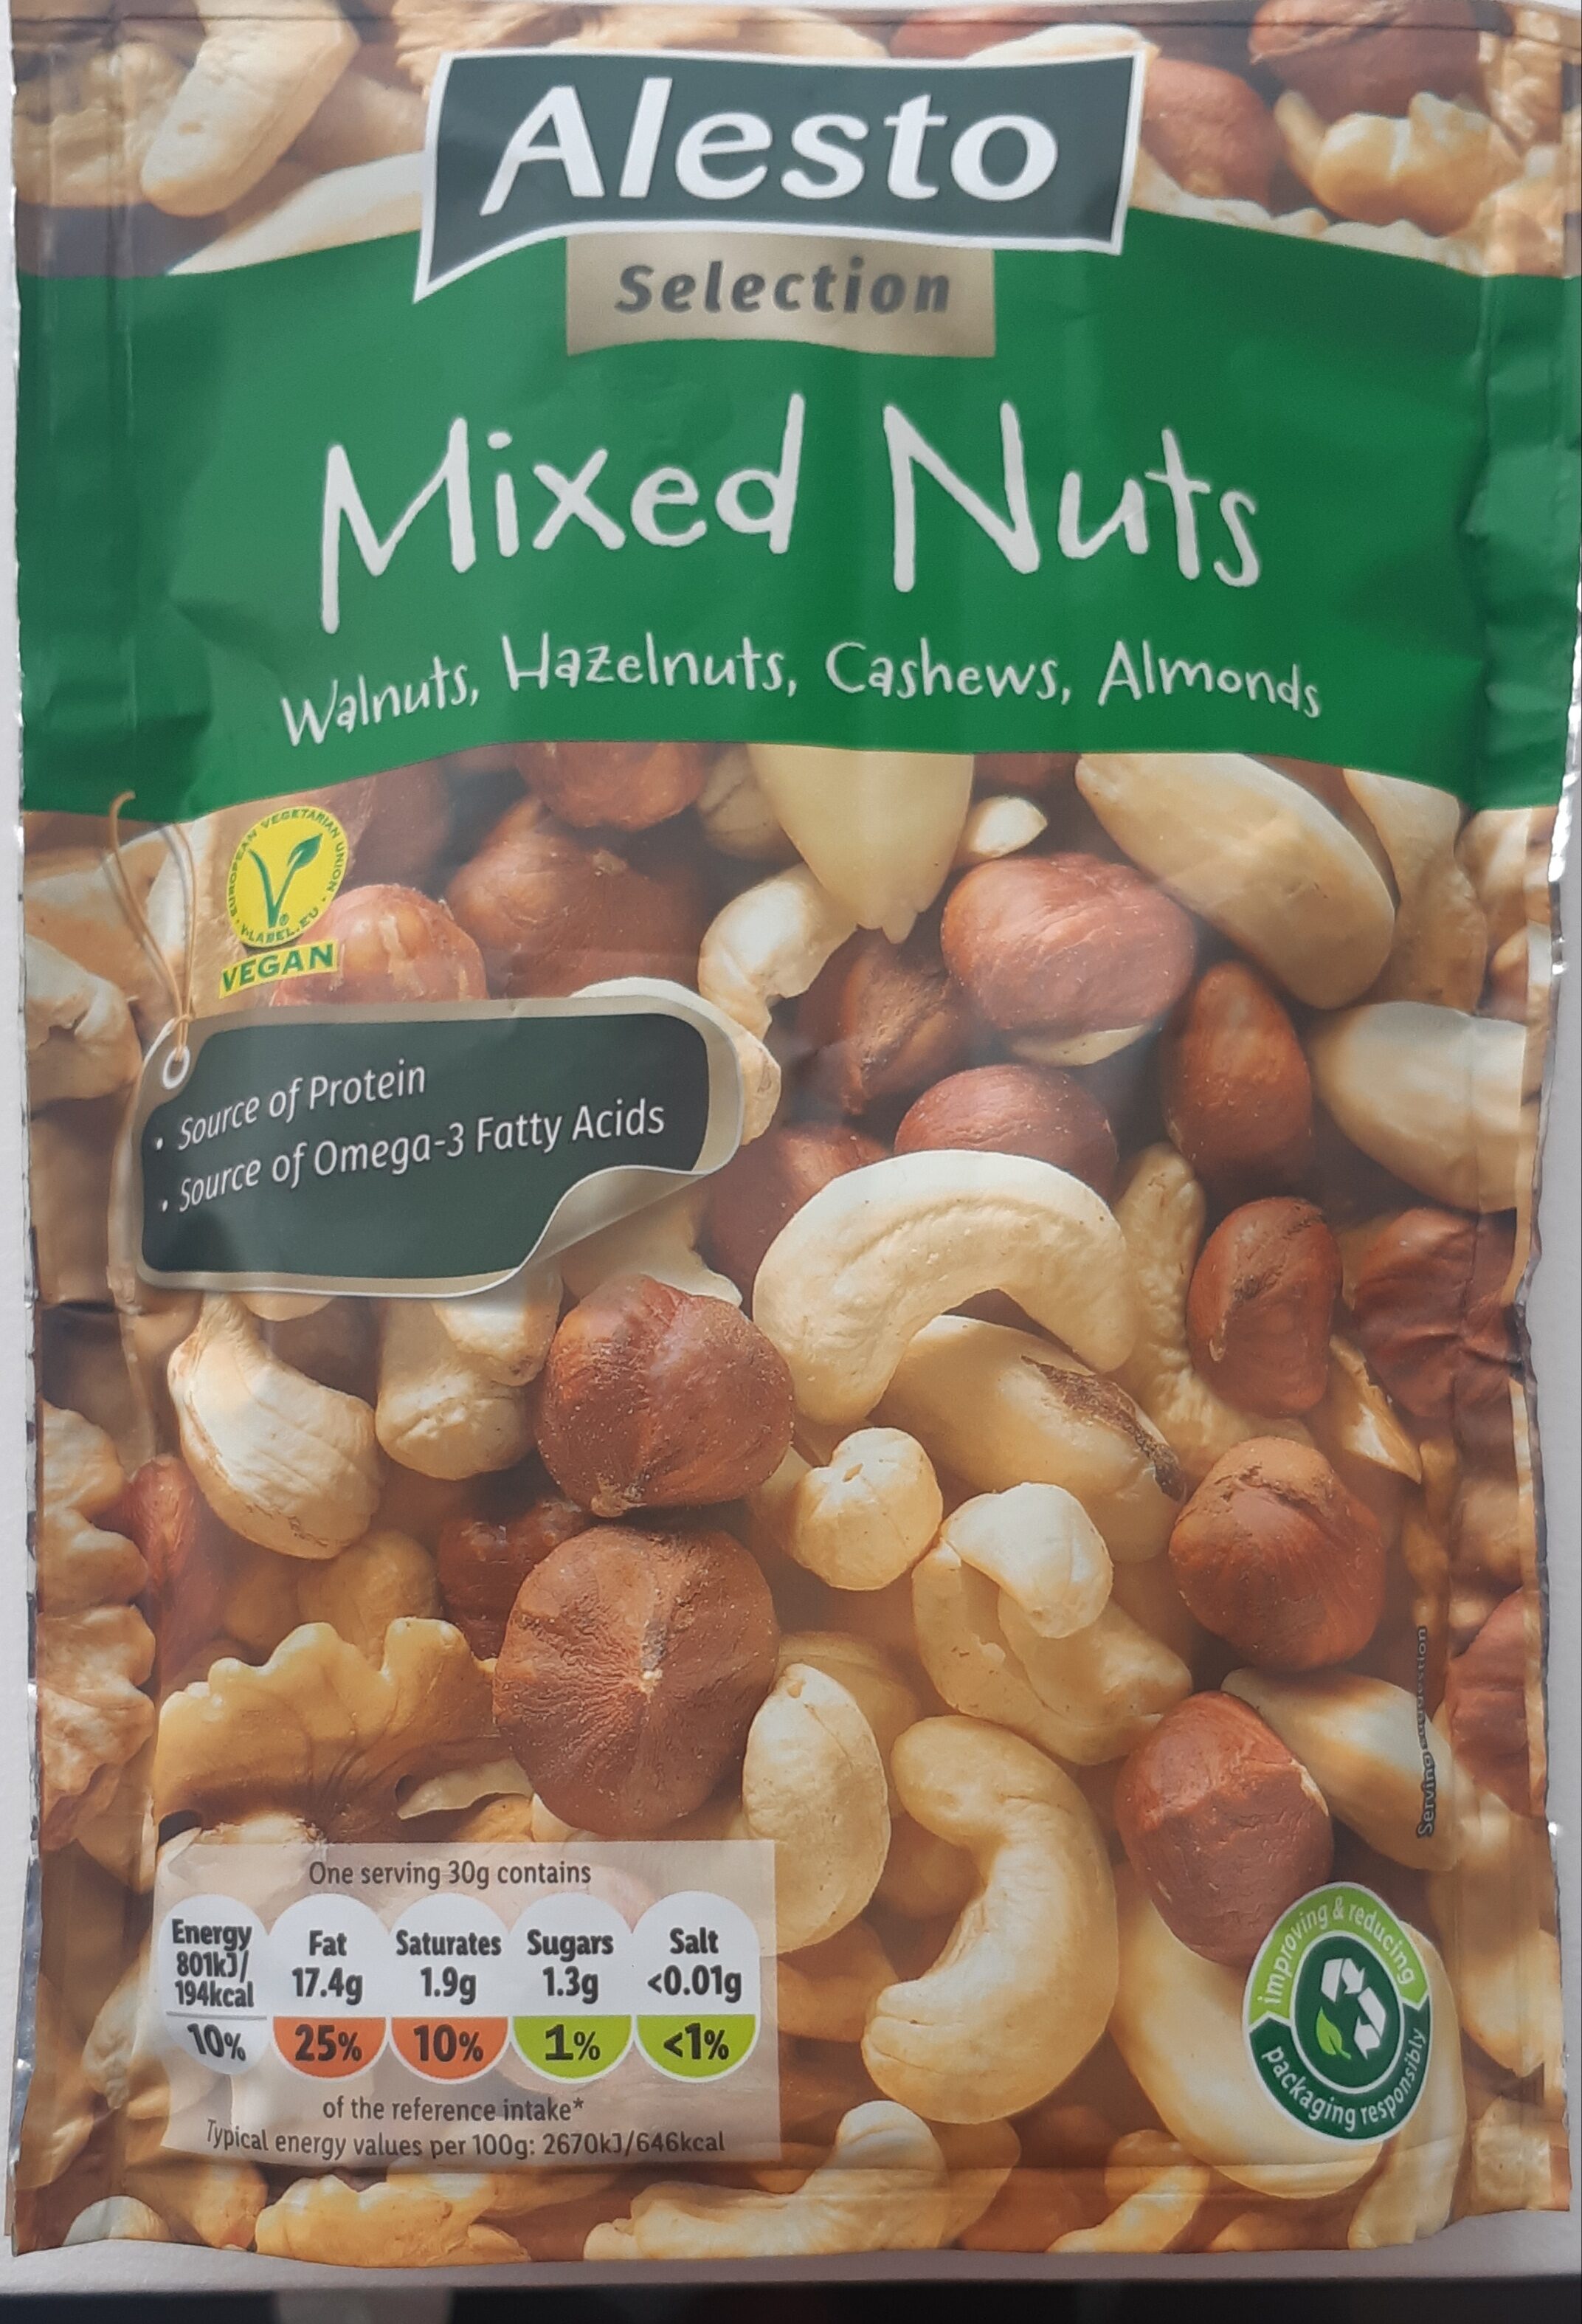 Alesto mixed nuts (walnuts, hazelnuts, cashews, almonds) - Product